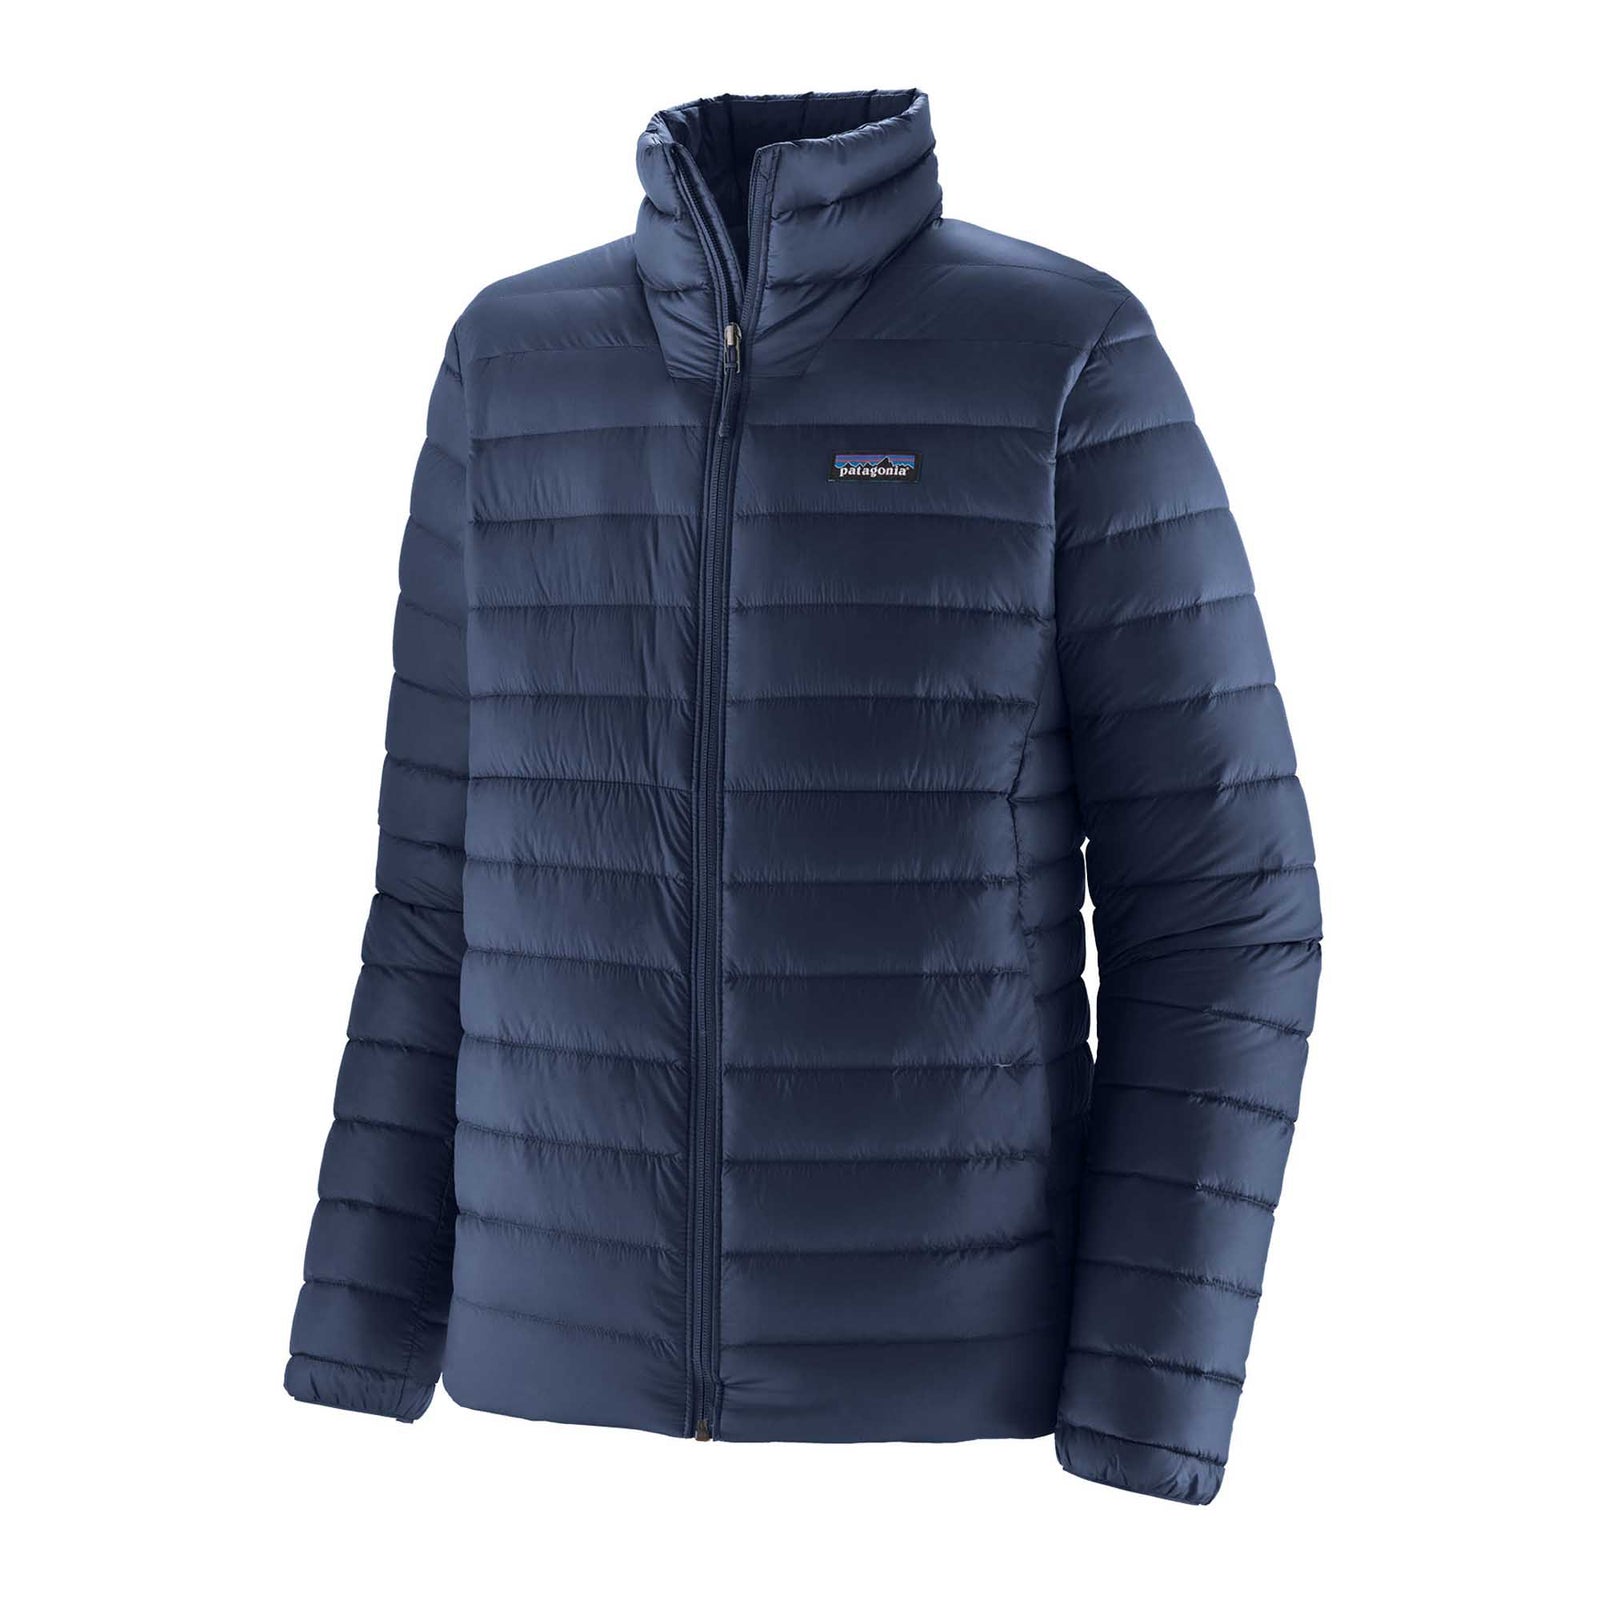 Patagonia Down Sweater Jacket - Women's Extra Large XL ~ $279